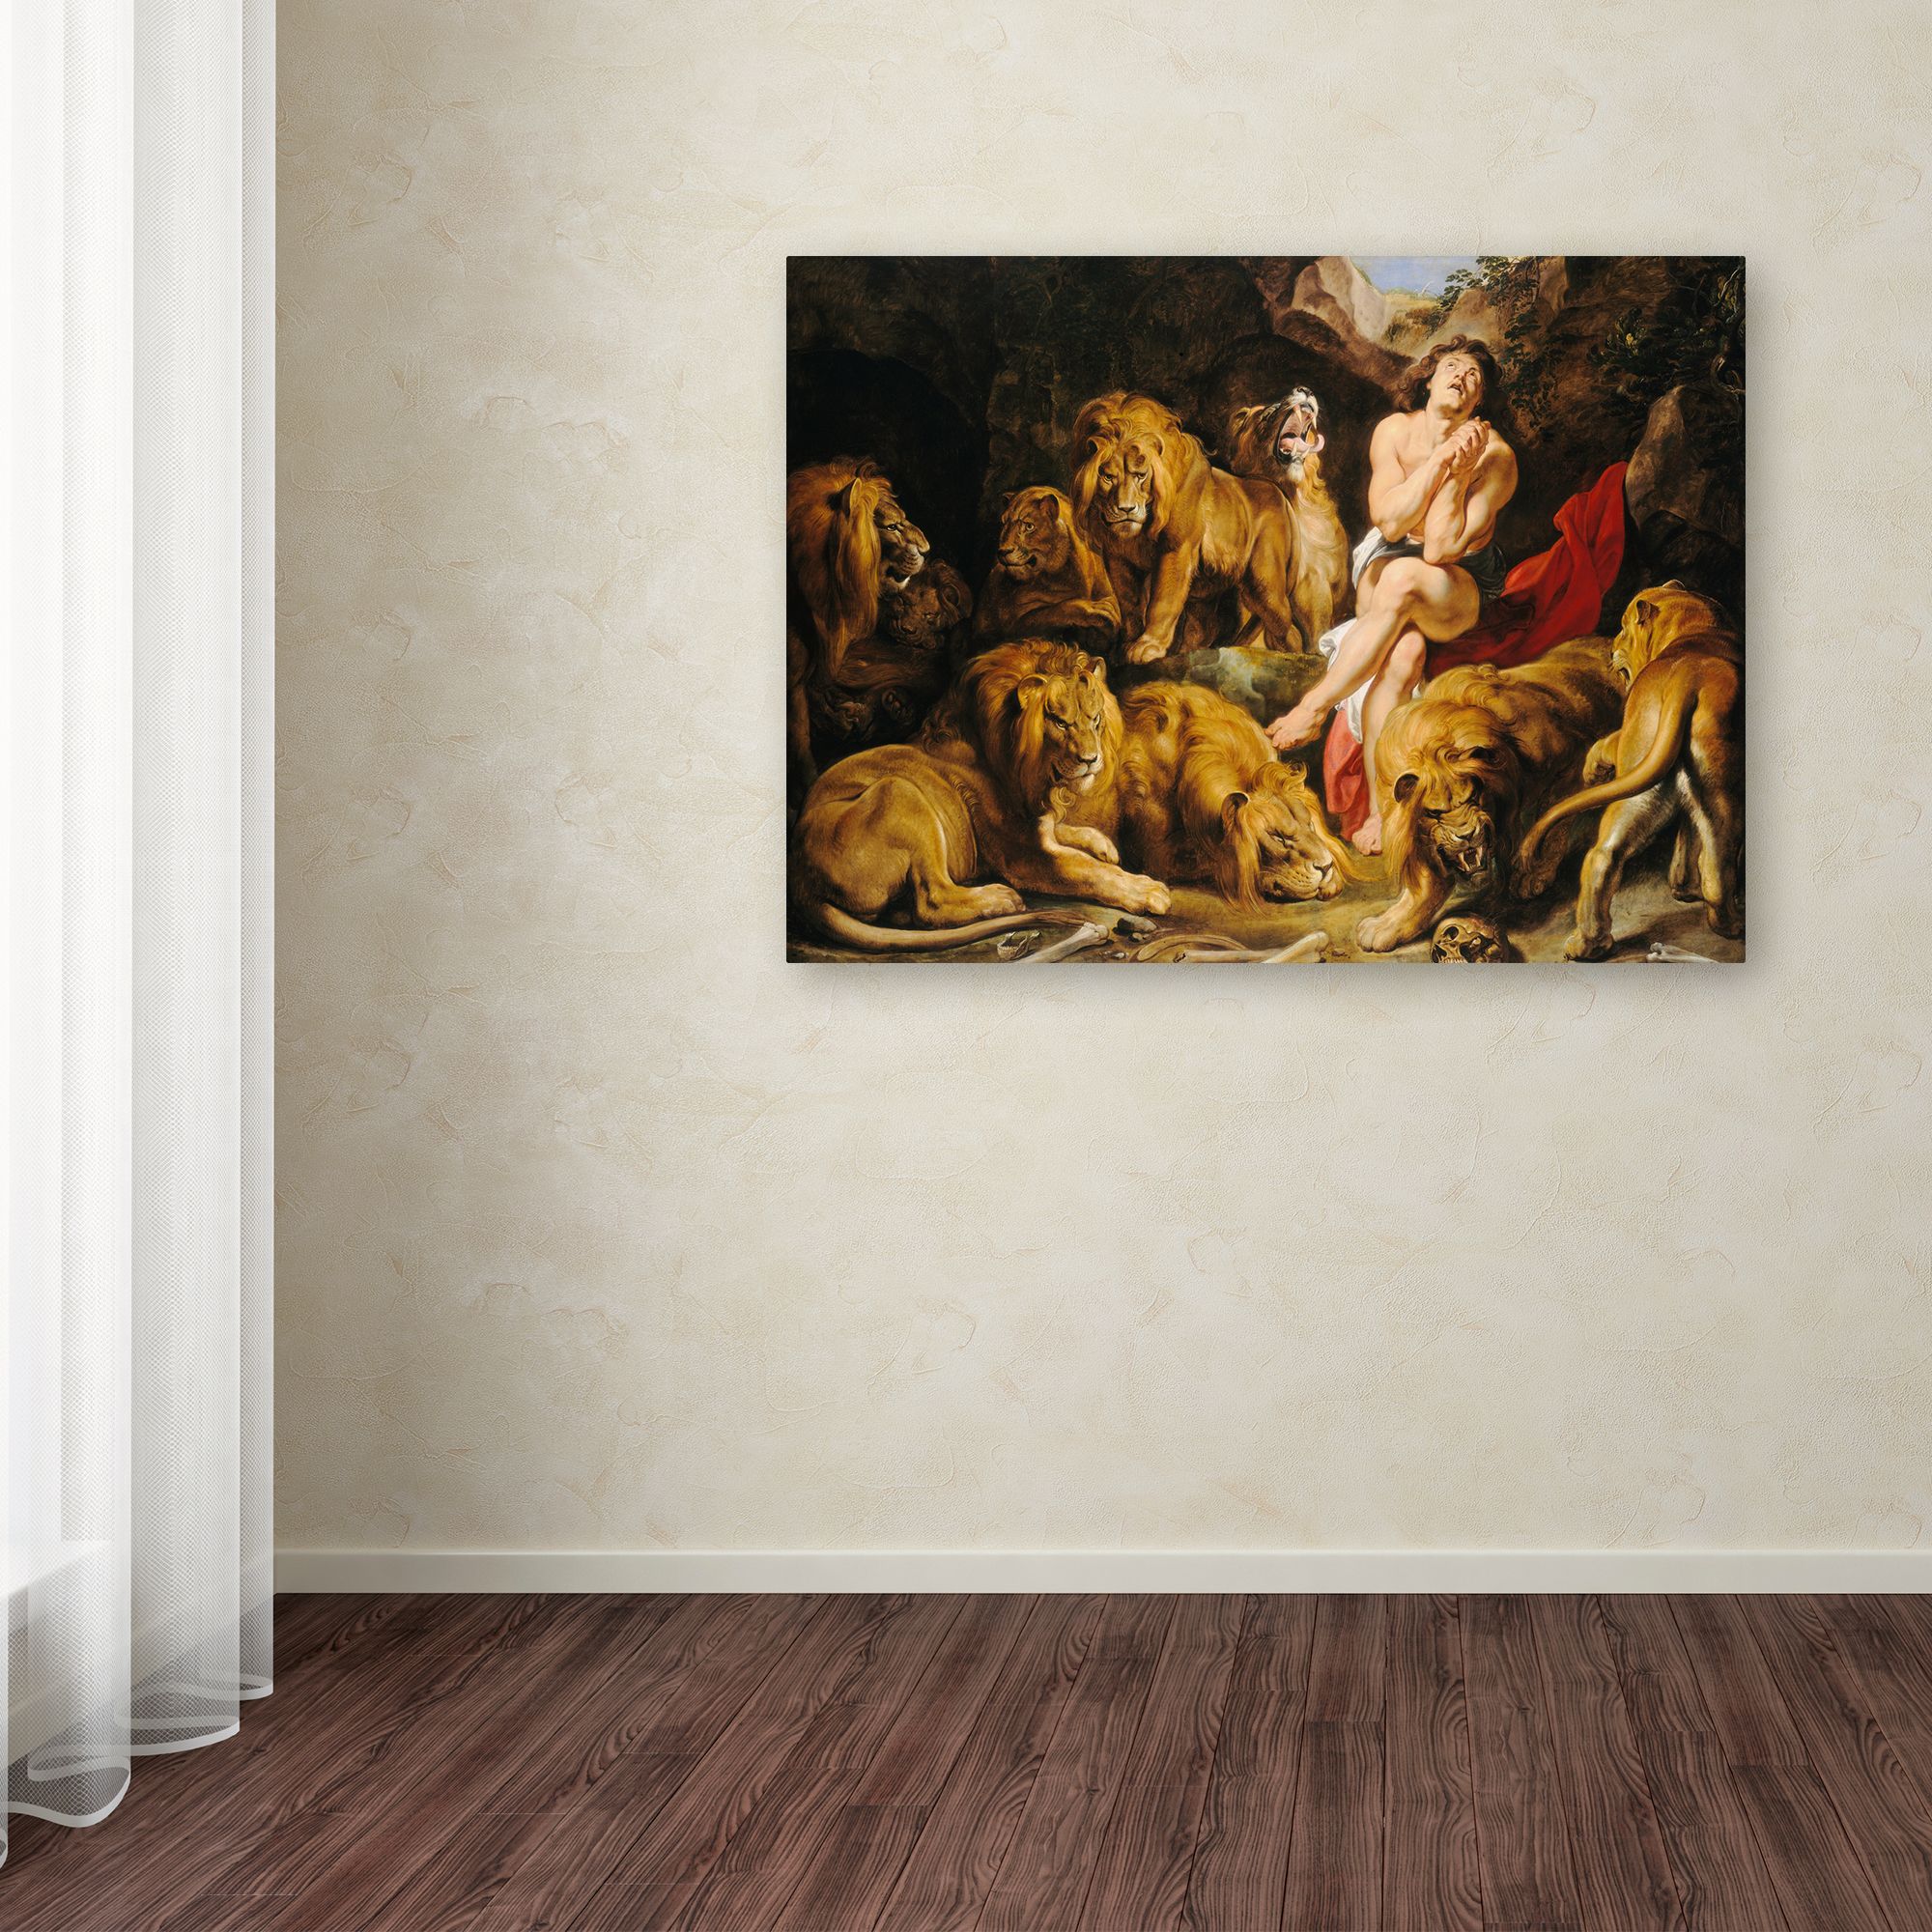 Trademark Fine Art 'Daniel In The Lions Den' Canvas Art by Peter Paul Rubens - image 3 of 3